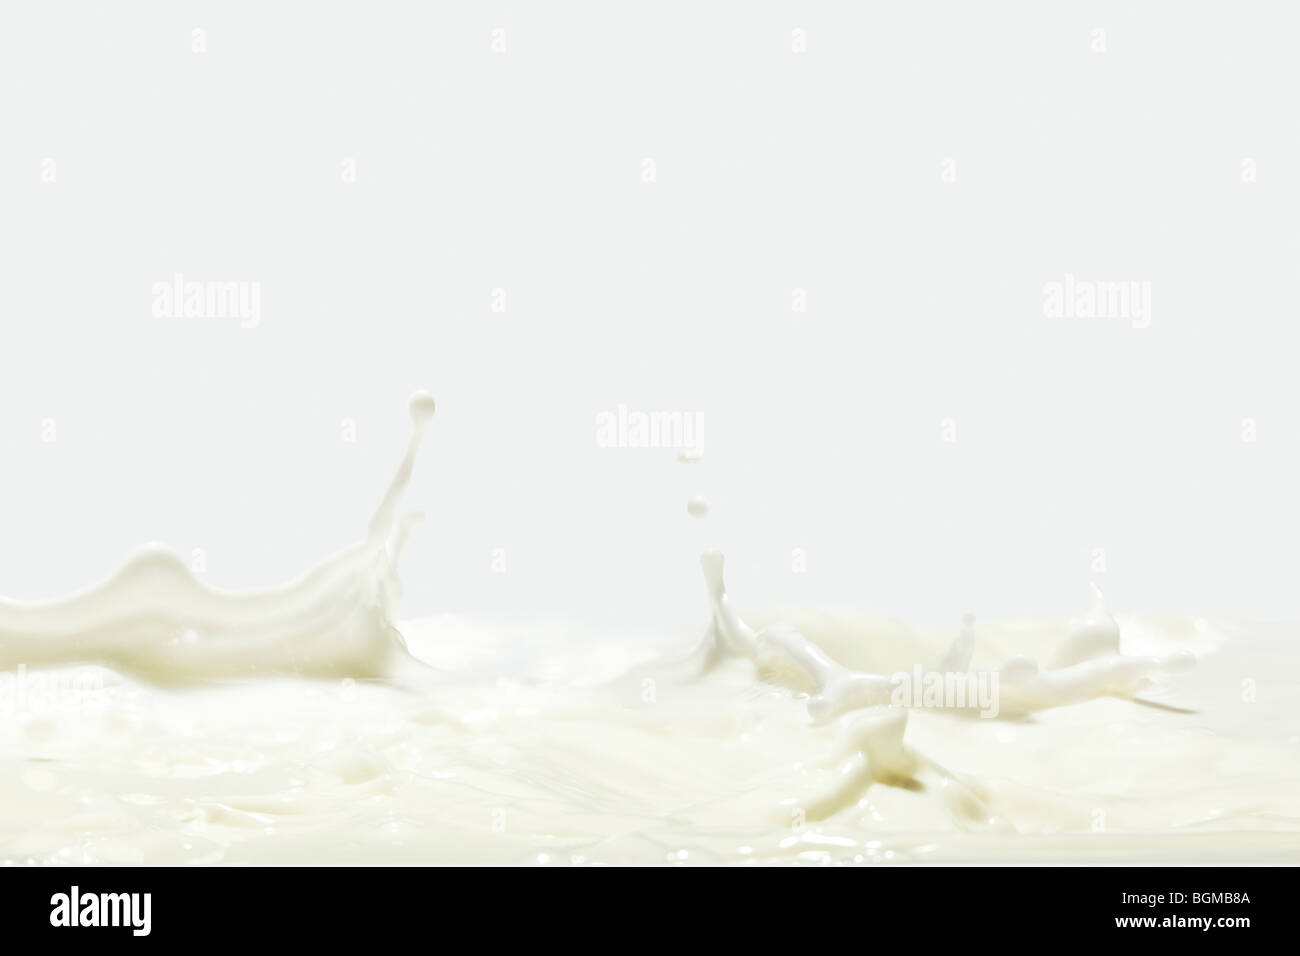 Splashing Milk on a White Background Stock Photo